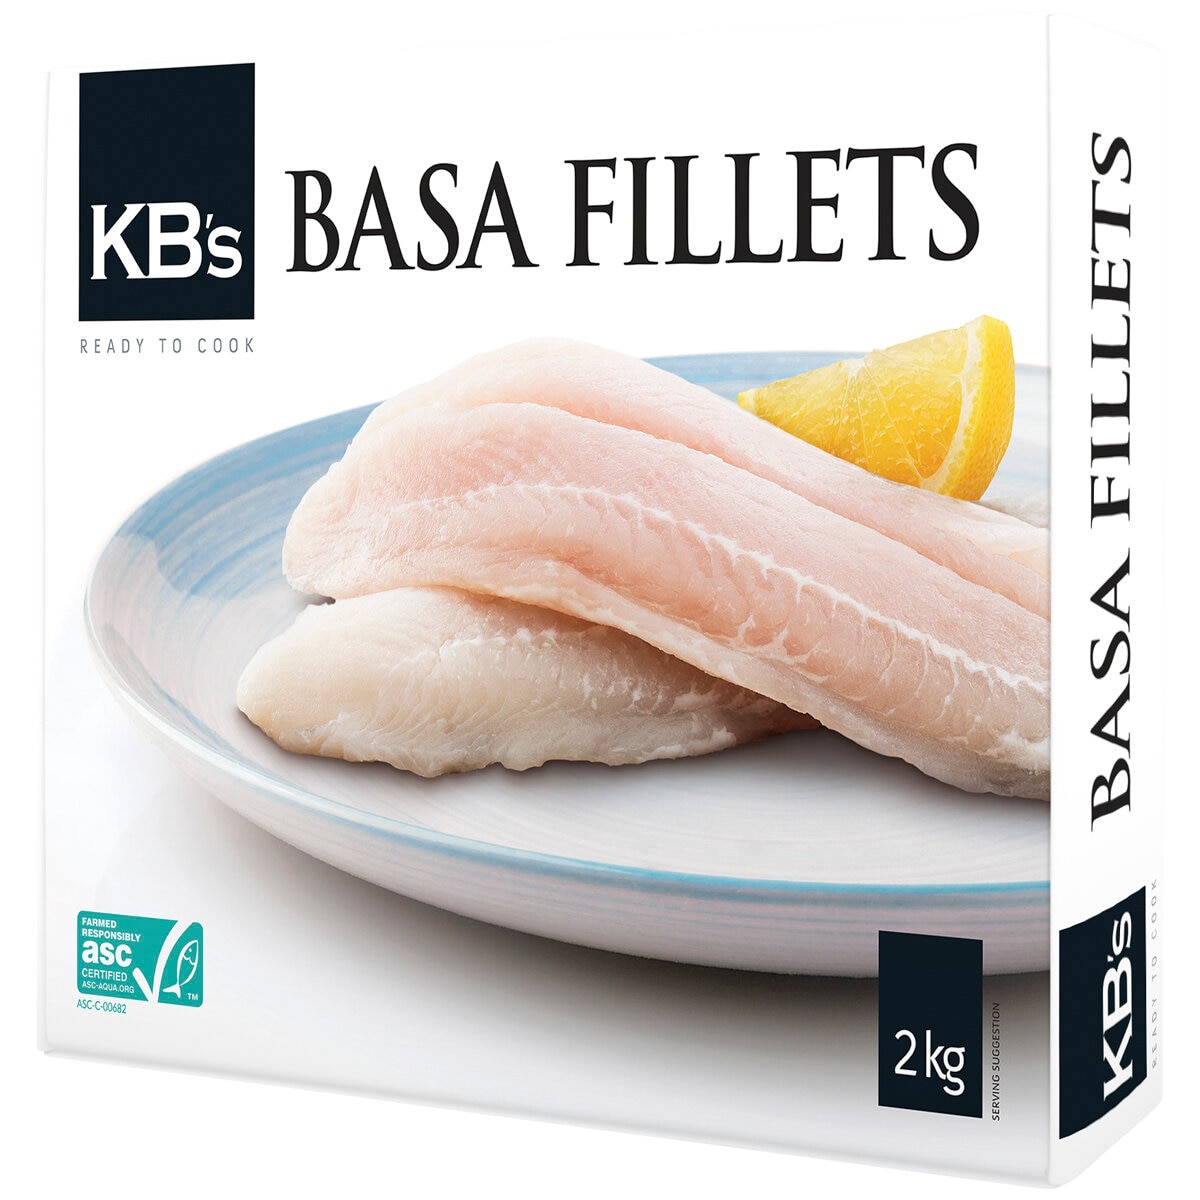 KB’s Premium Basa Fillets 2 kg